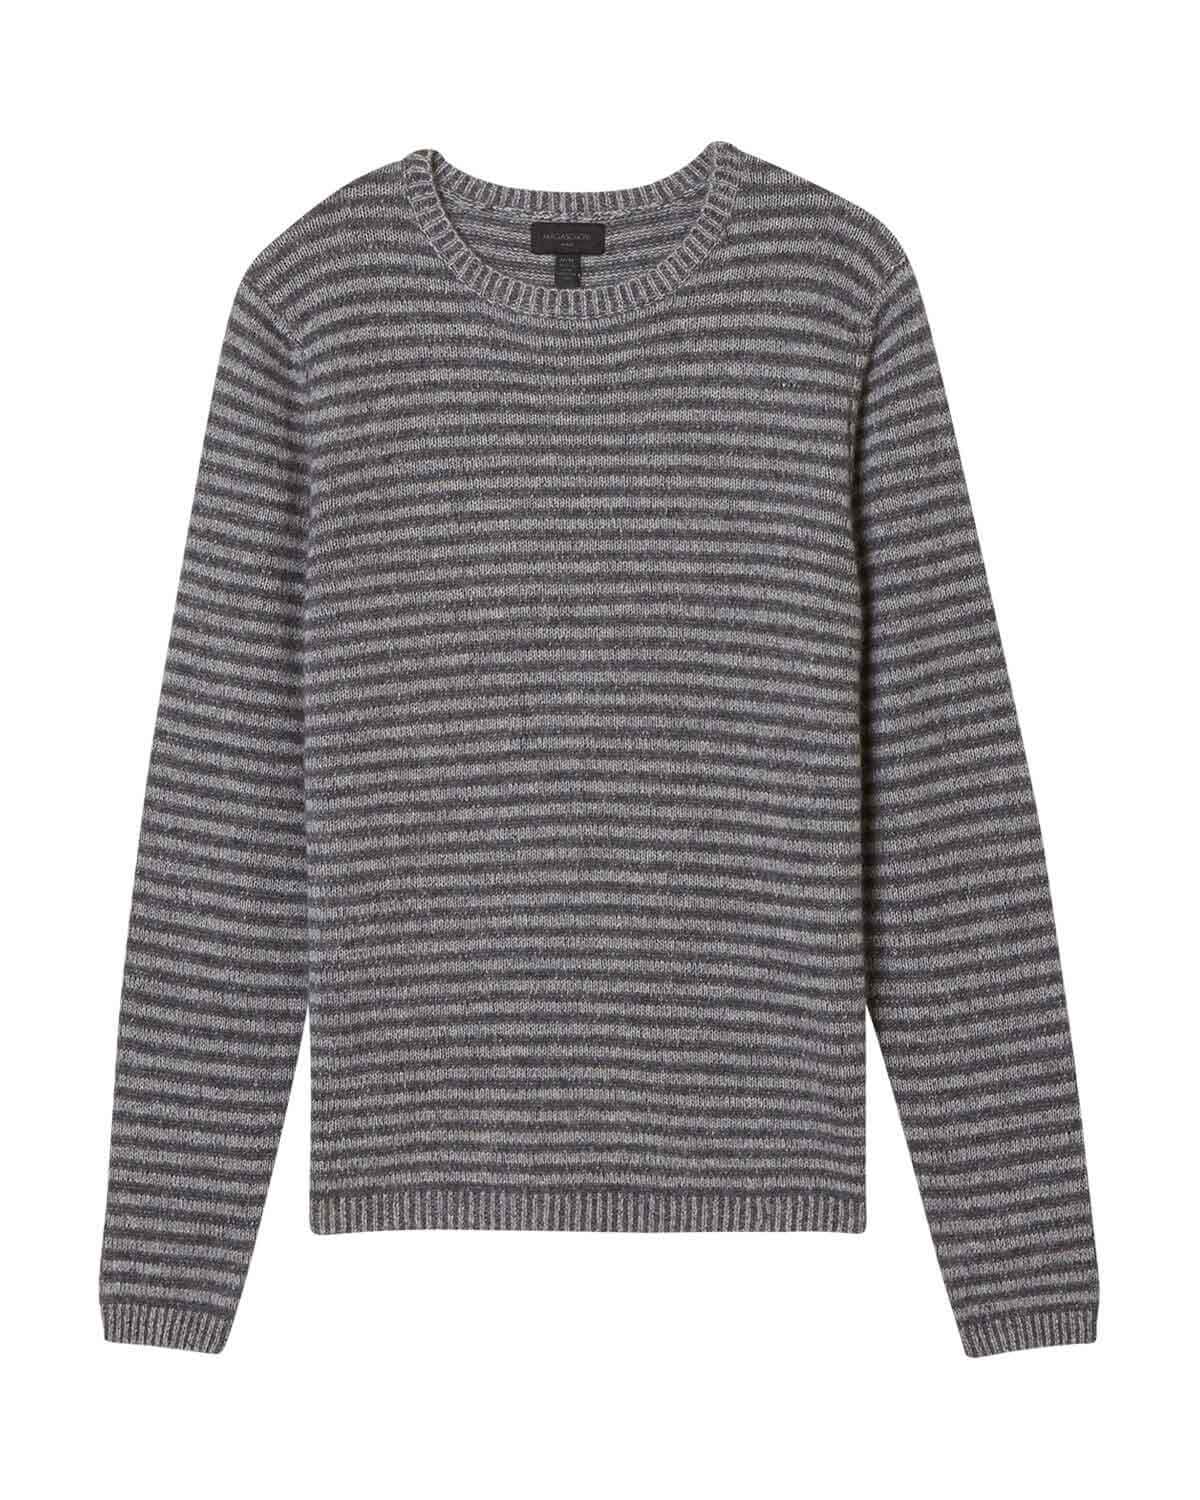 Shop Men's Cashmere Stripe Pullover Sweater | Magaschoni Men | JANE + MERCER